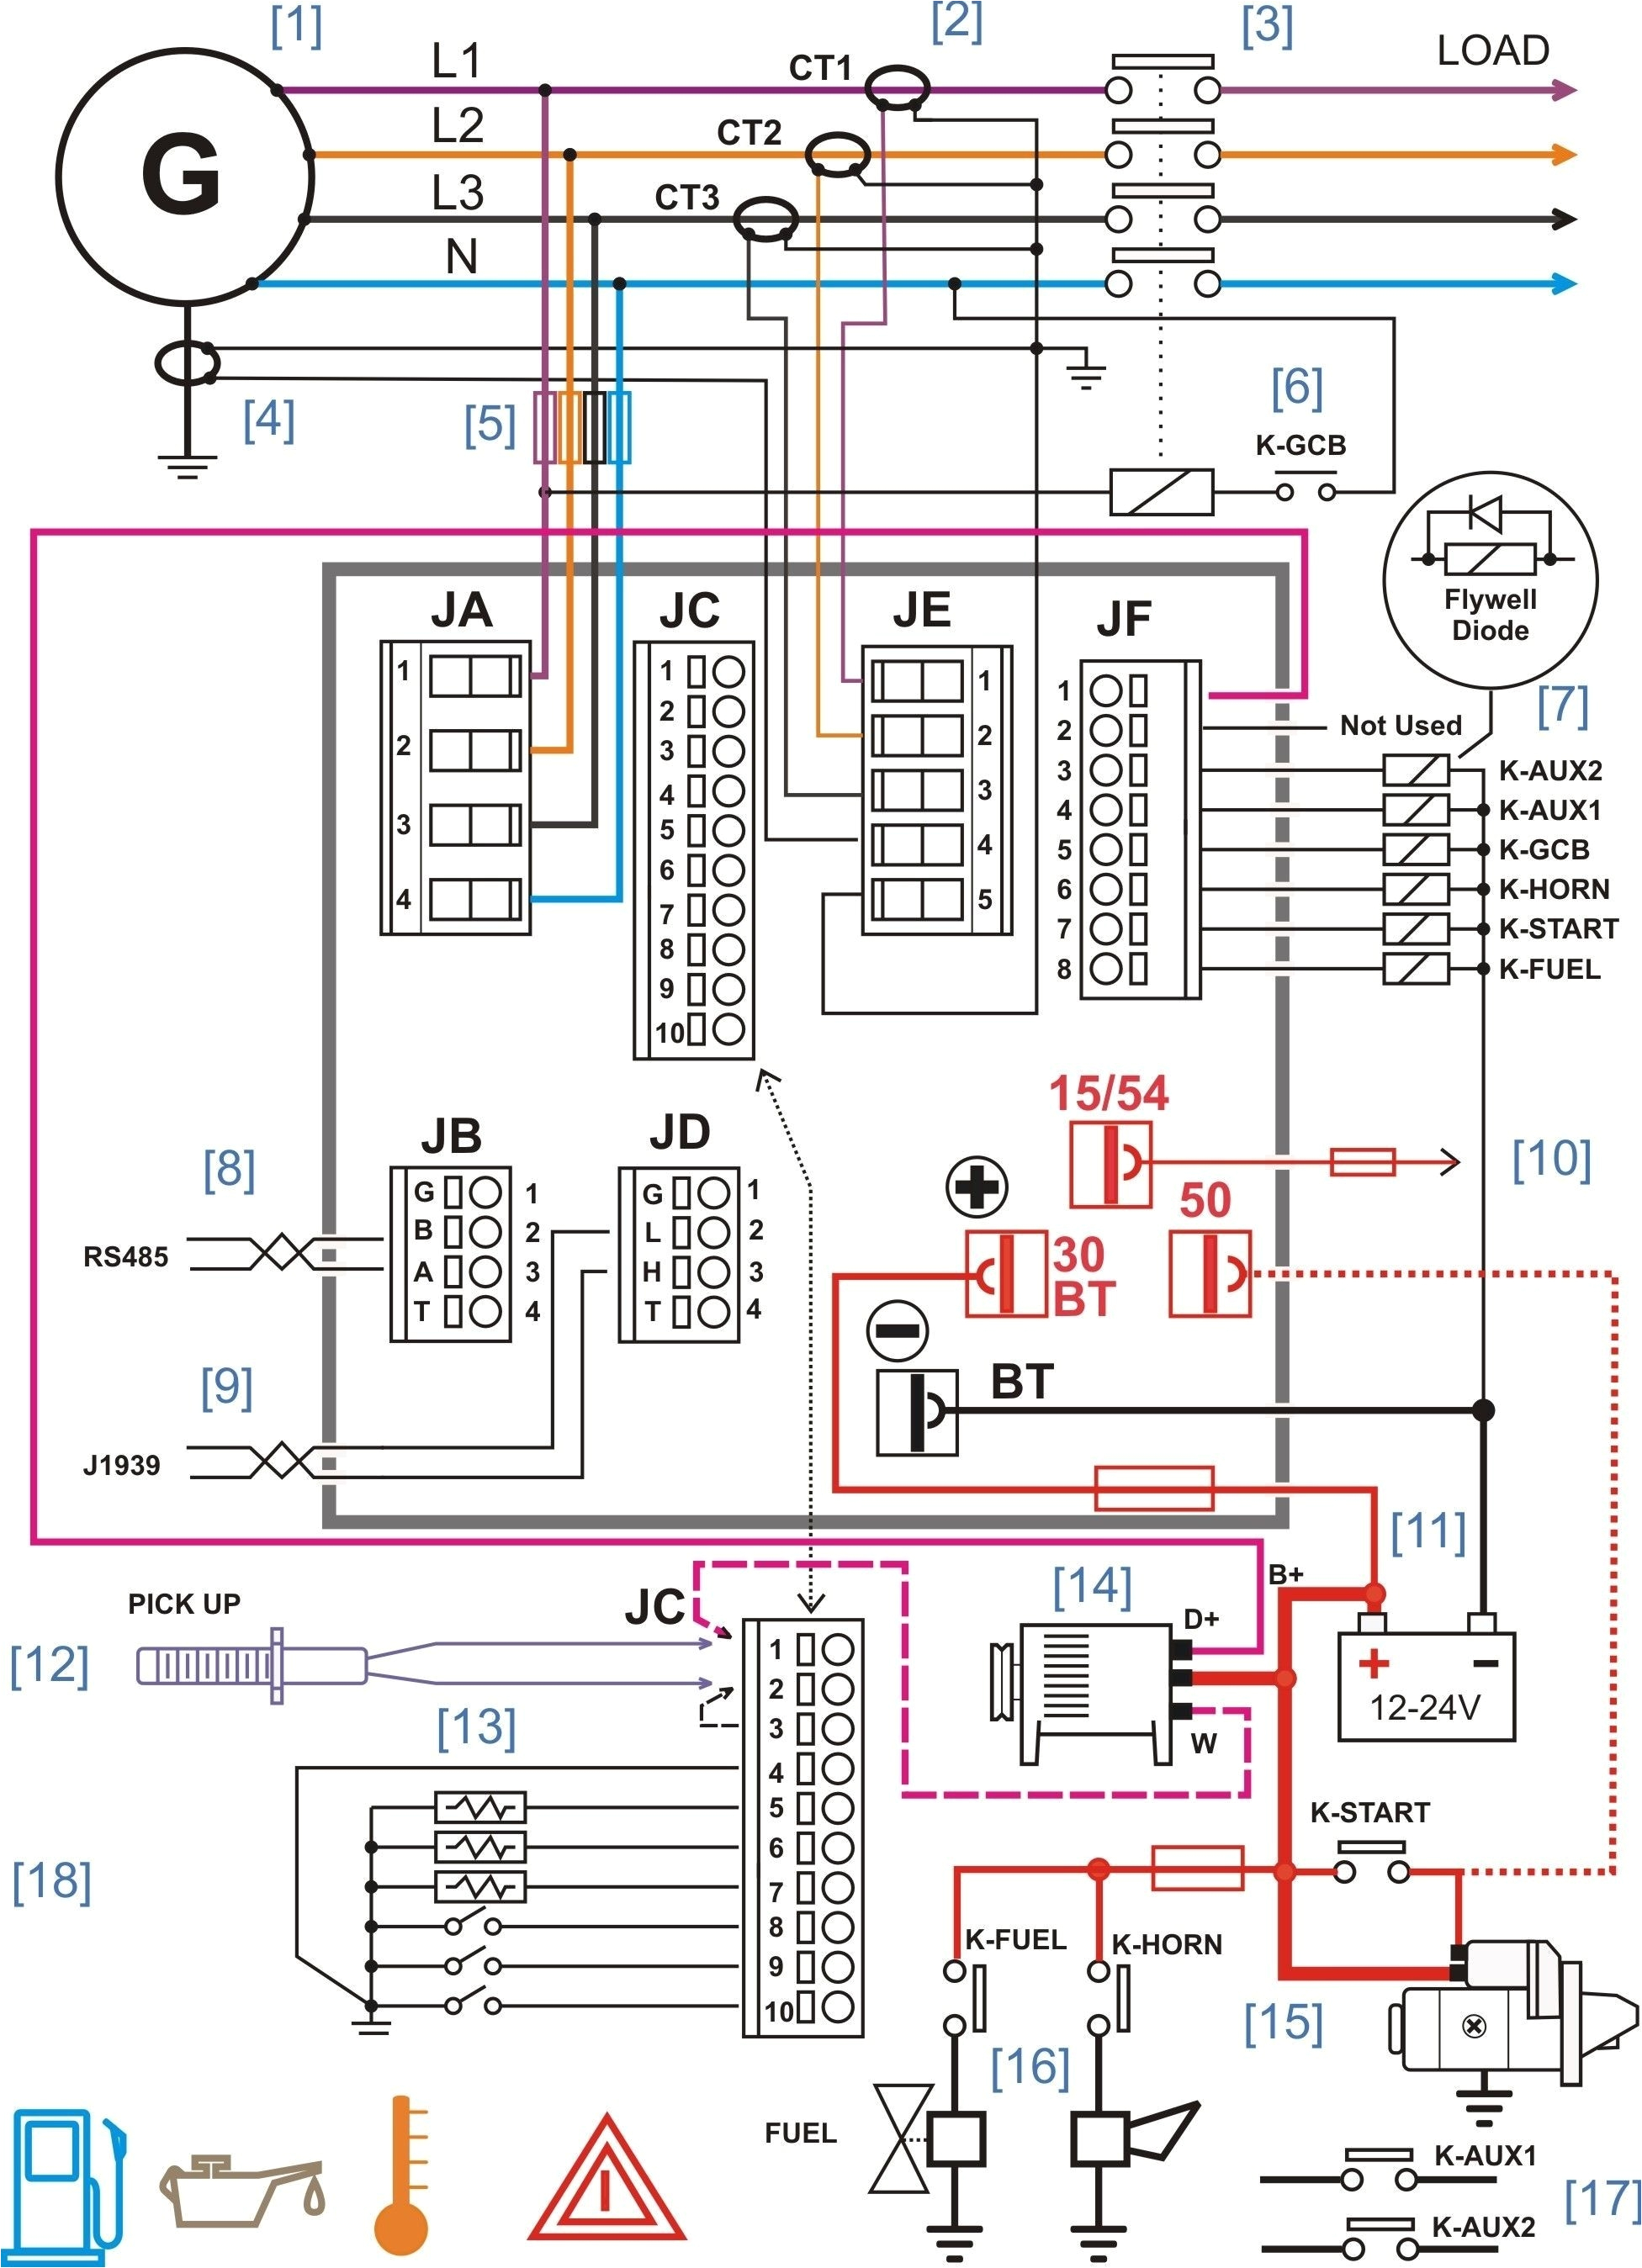 Wiring Diagram Builder Guitar Wiring Diagram Editor Wiring Diagram View